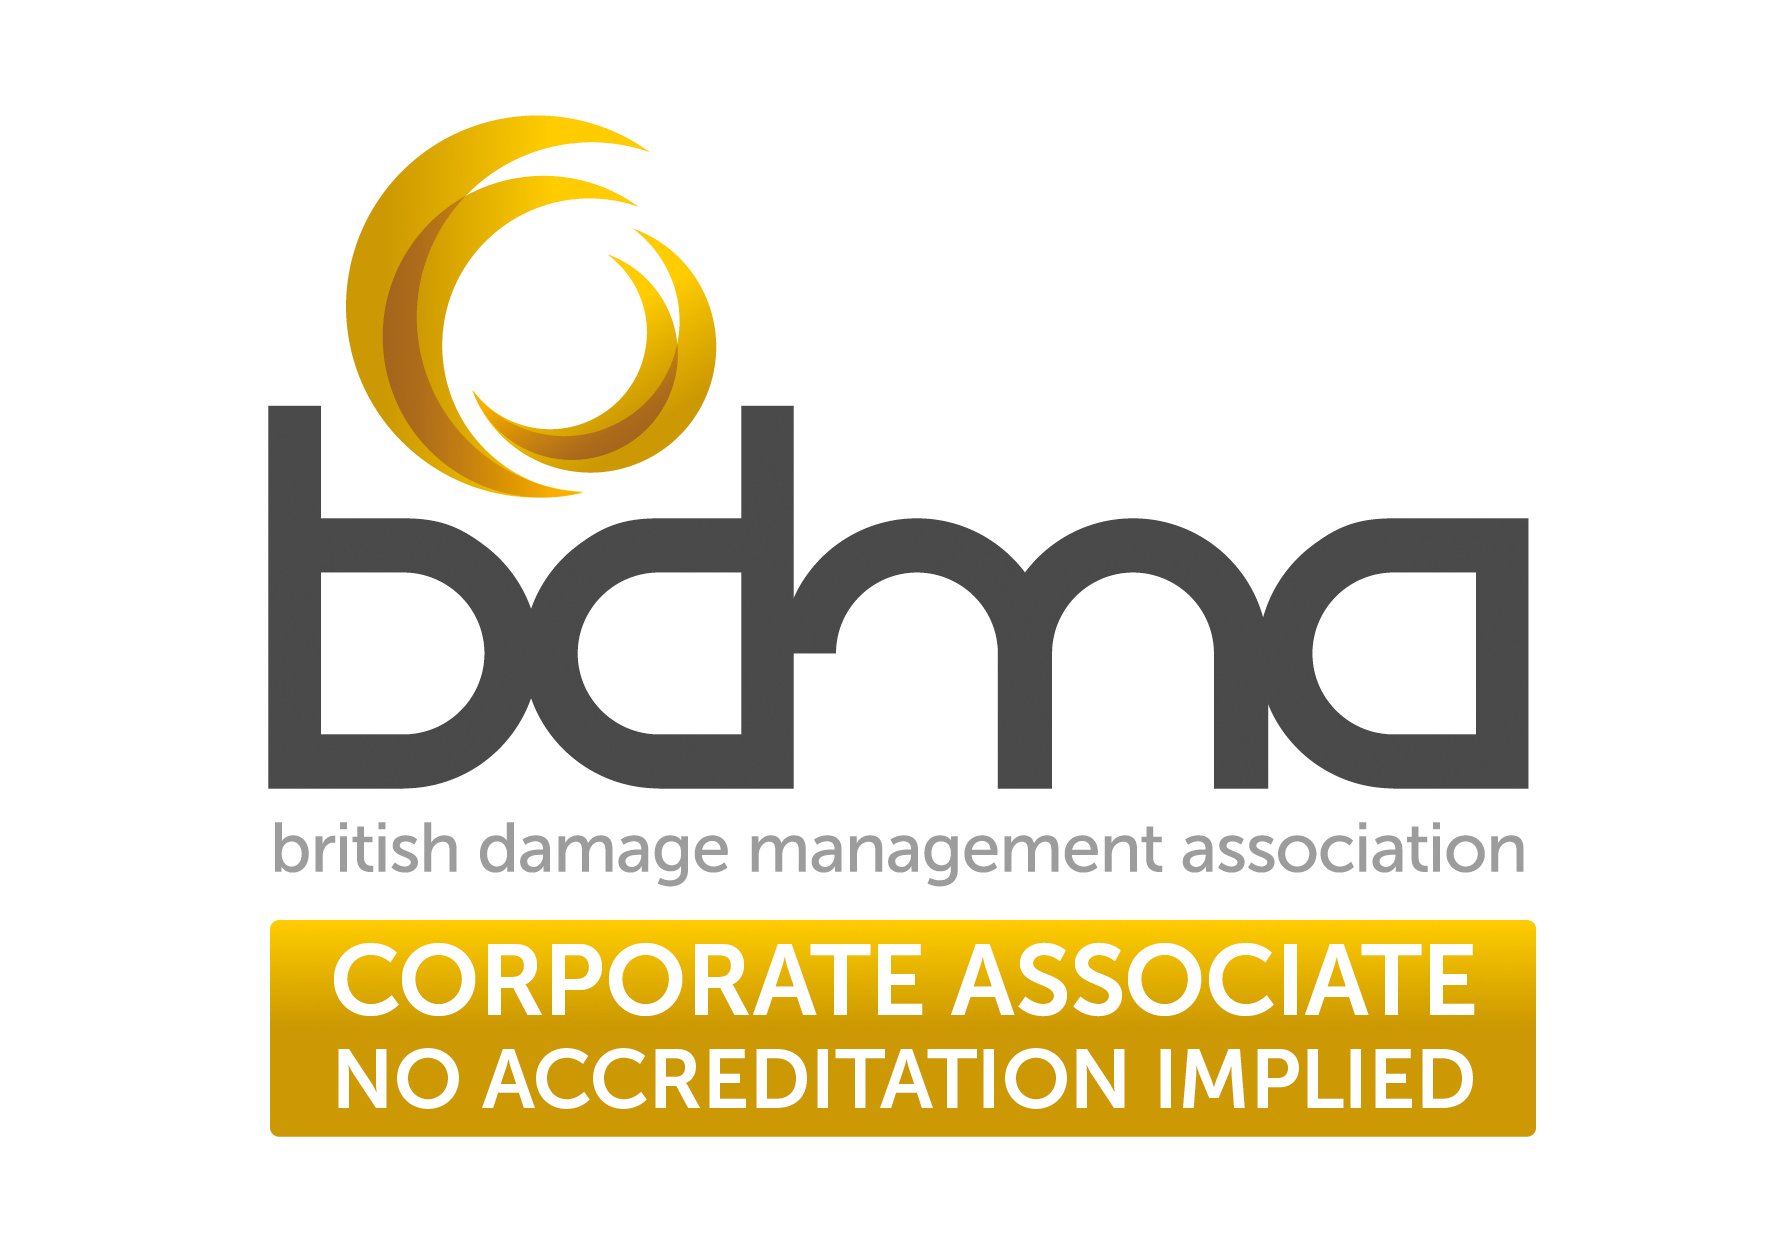 BDMA Full Colour Logo CORPORATE ASSOCIATE GOLD SML RGB-01.jpg